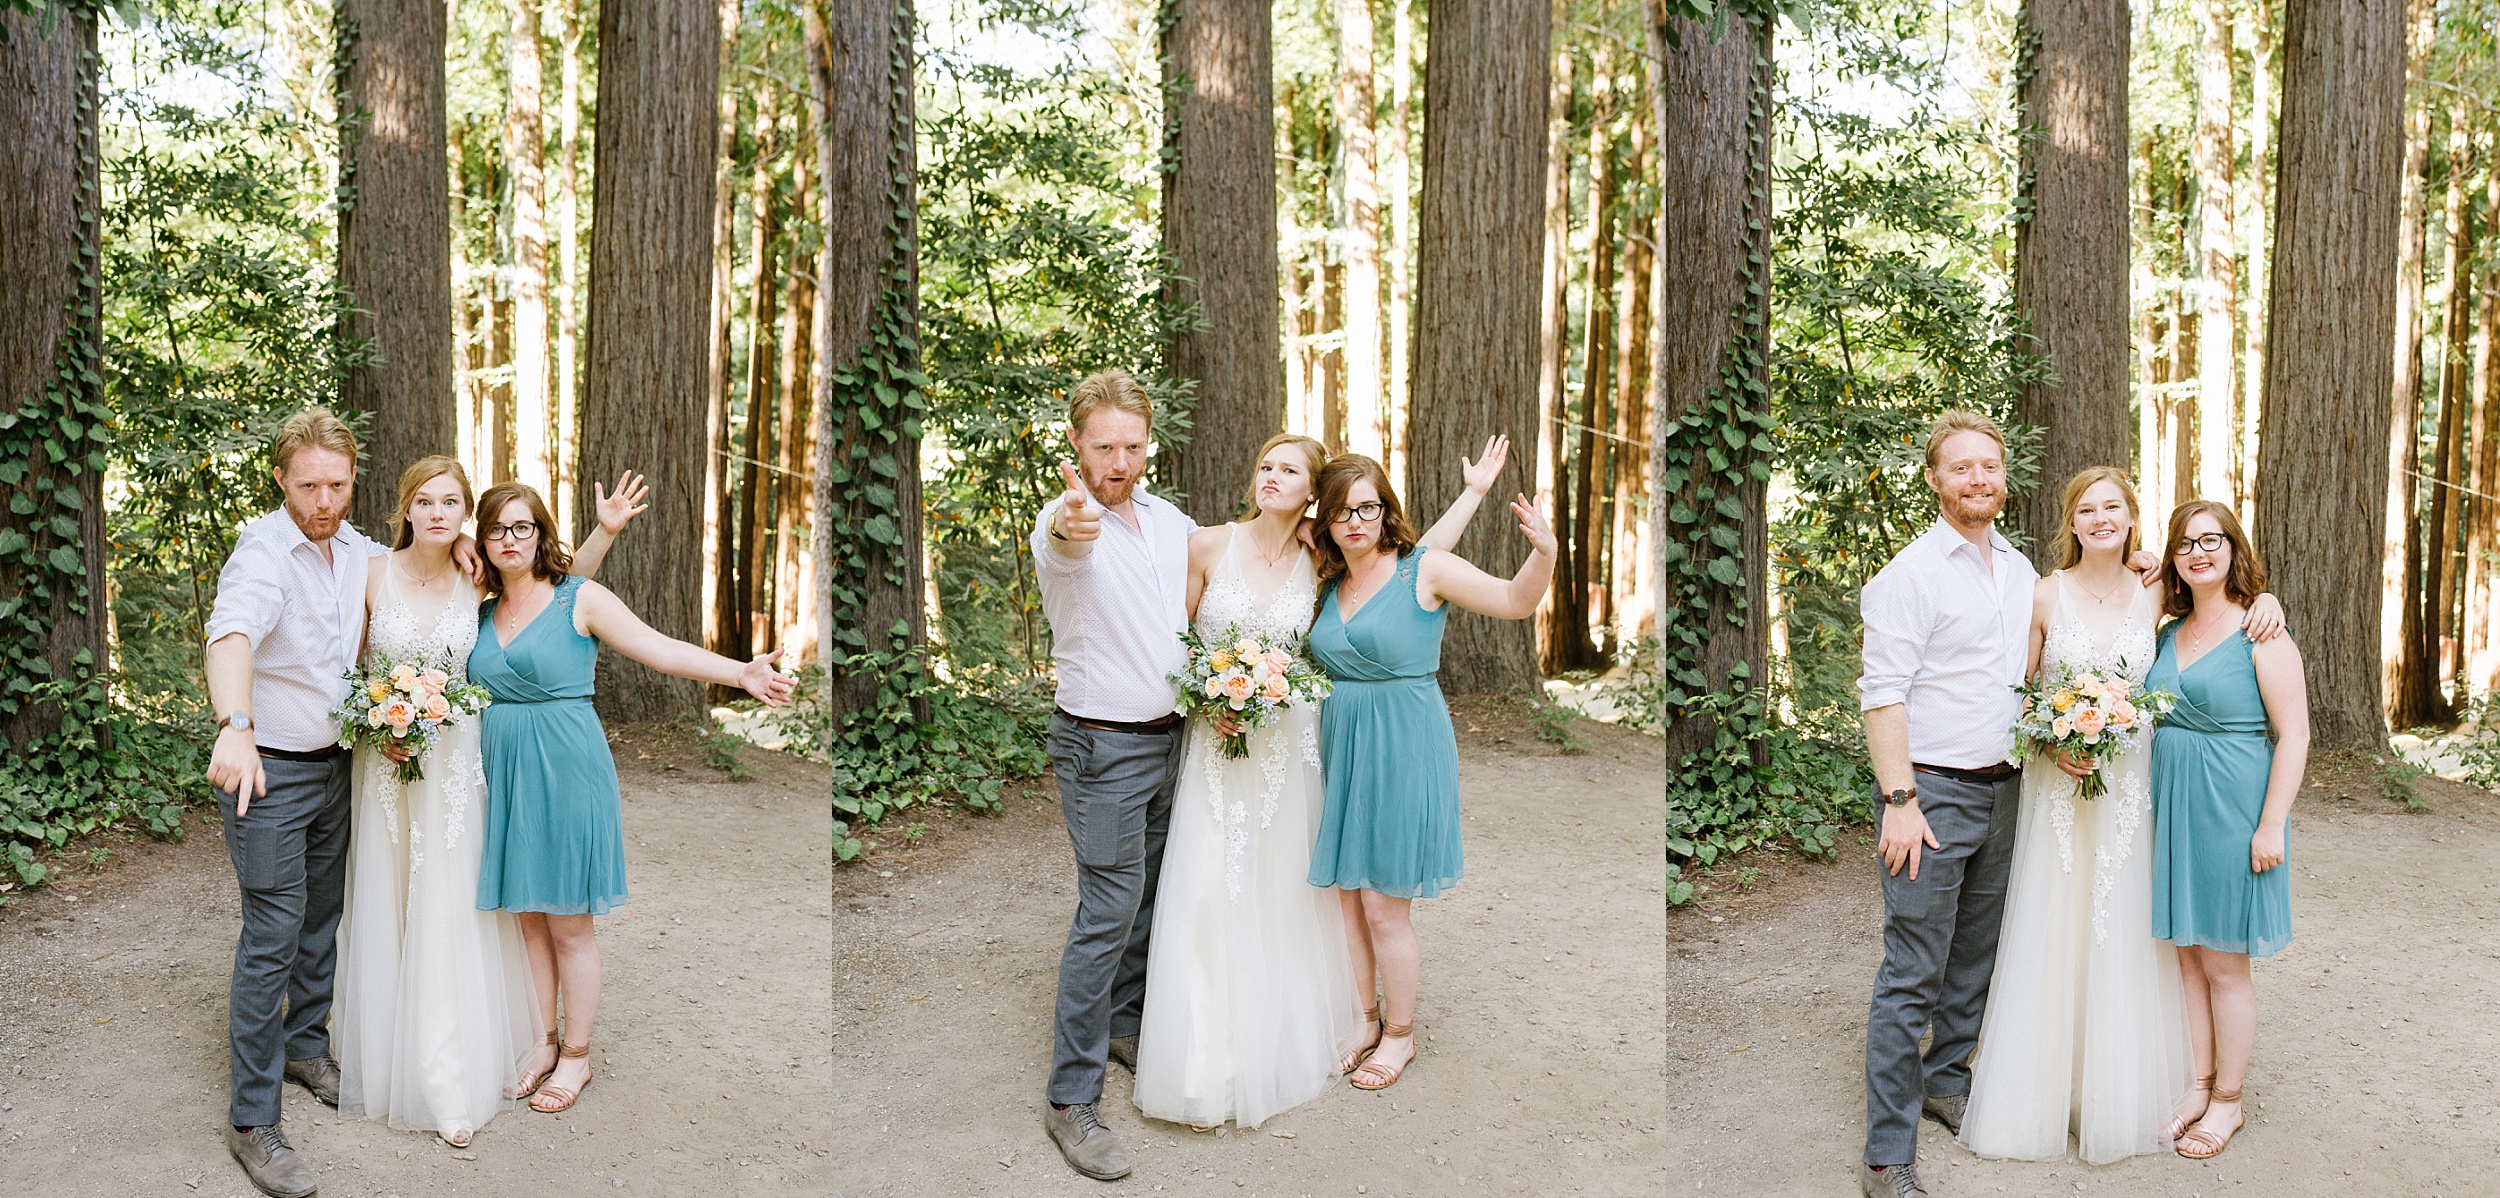 Amphitheatre-of-the-Redwoods-wedding-erikariley_chelsea-dier-photography_0026.jpg